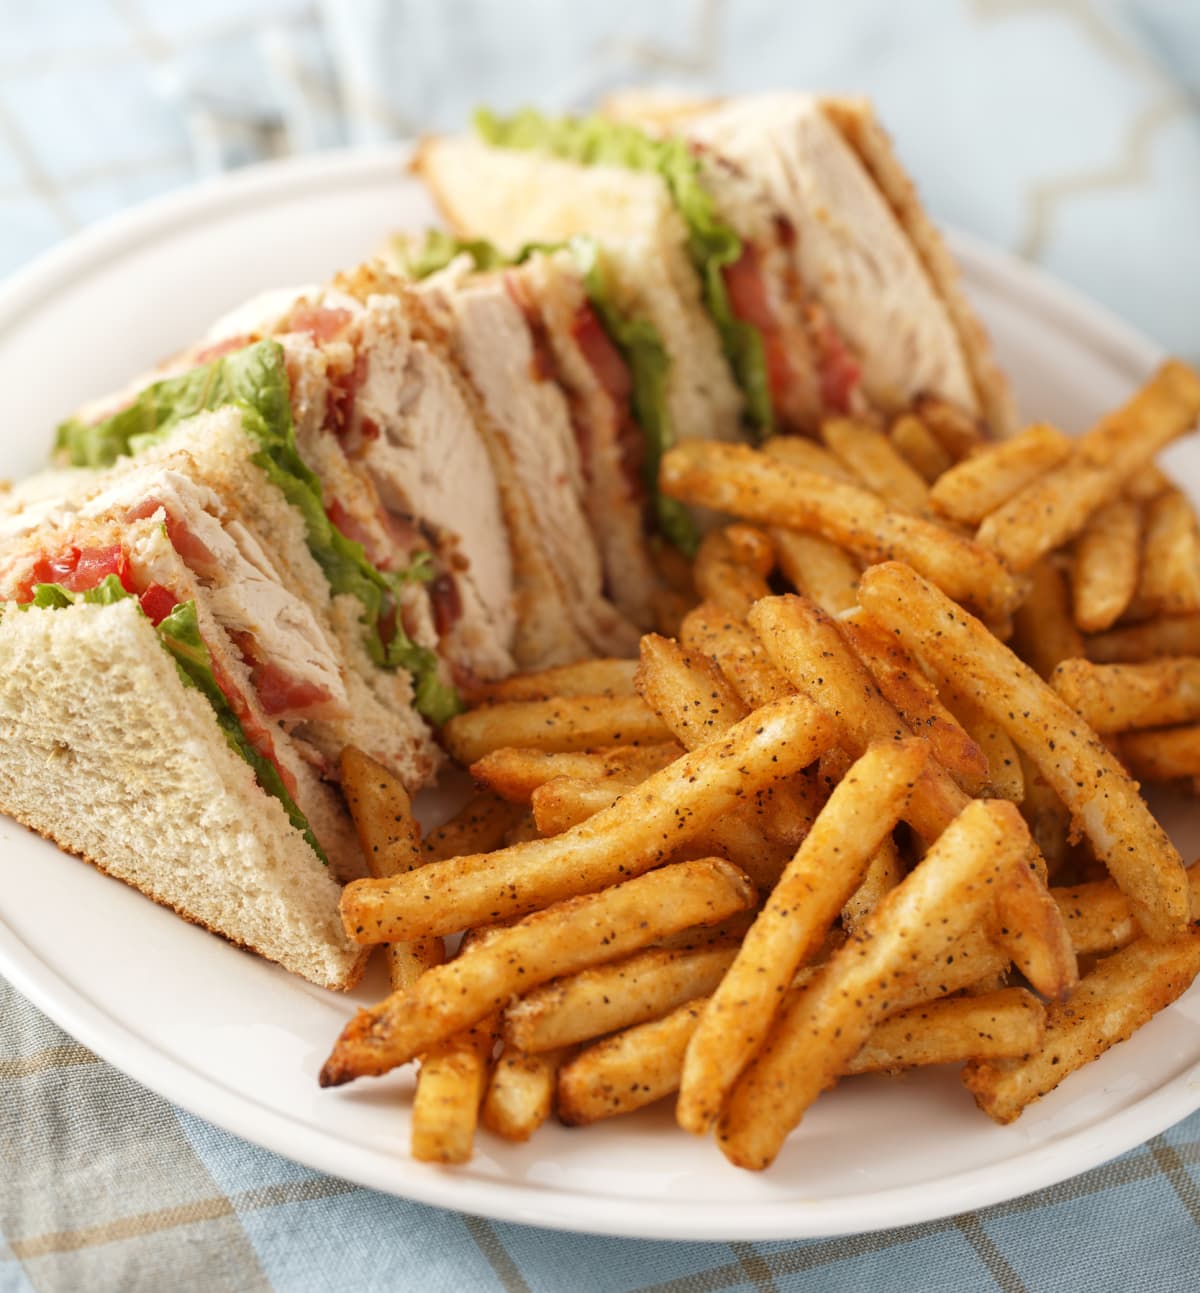 club sandwich on plate with seasoned fries